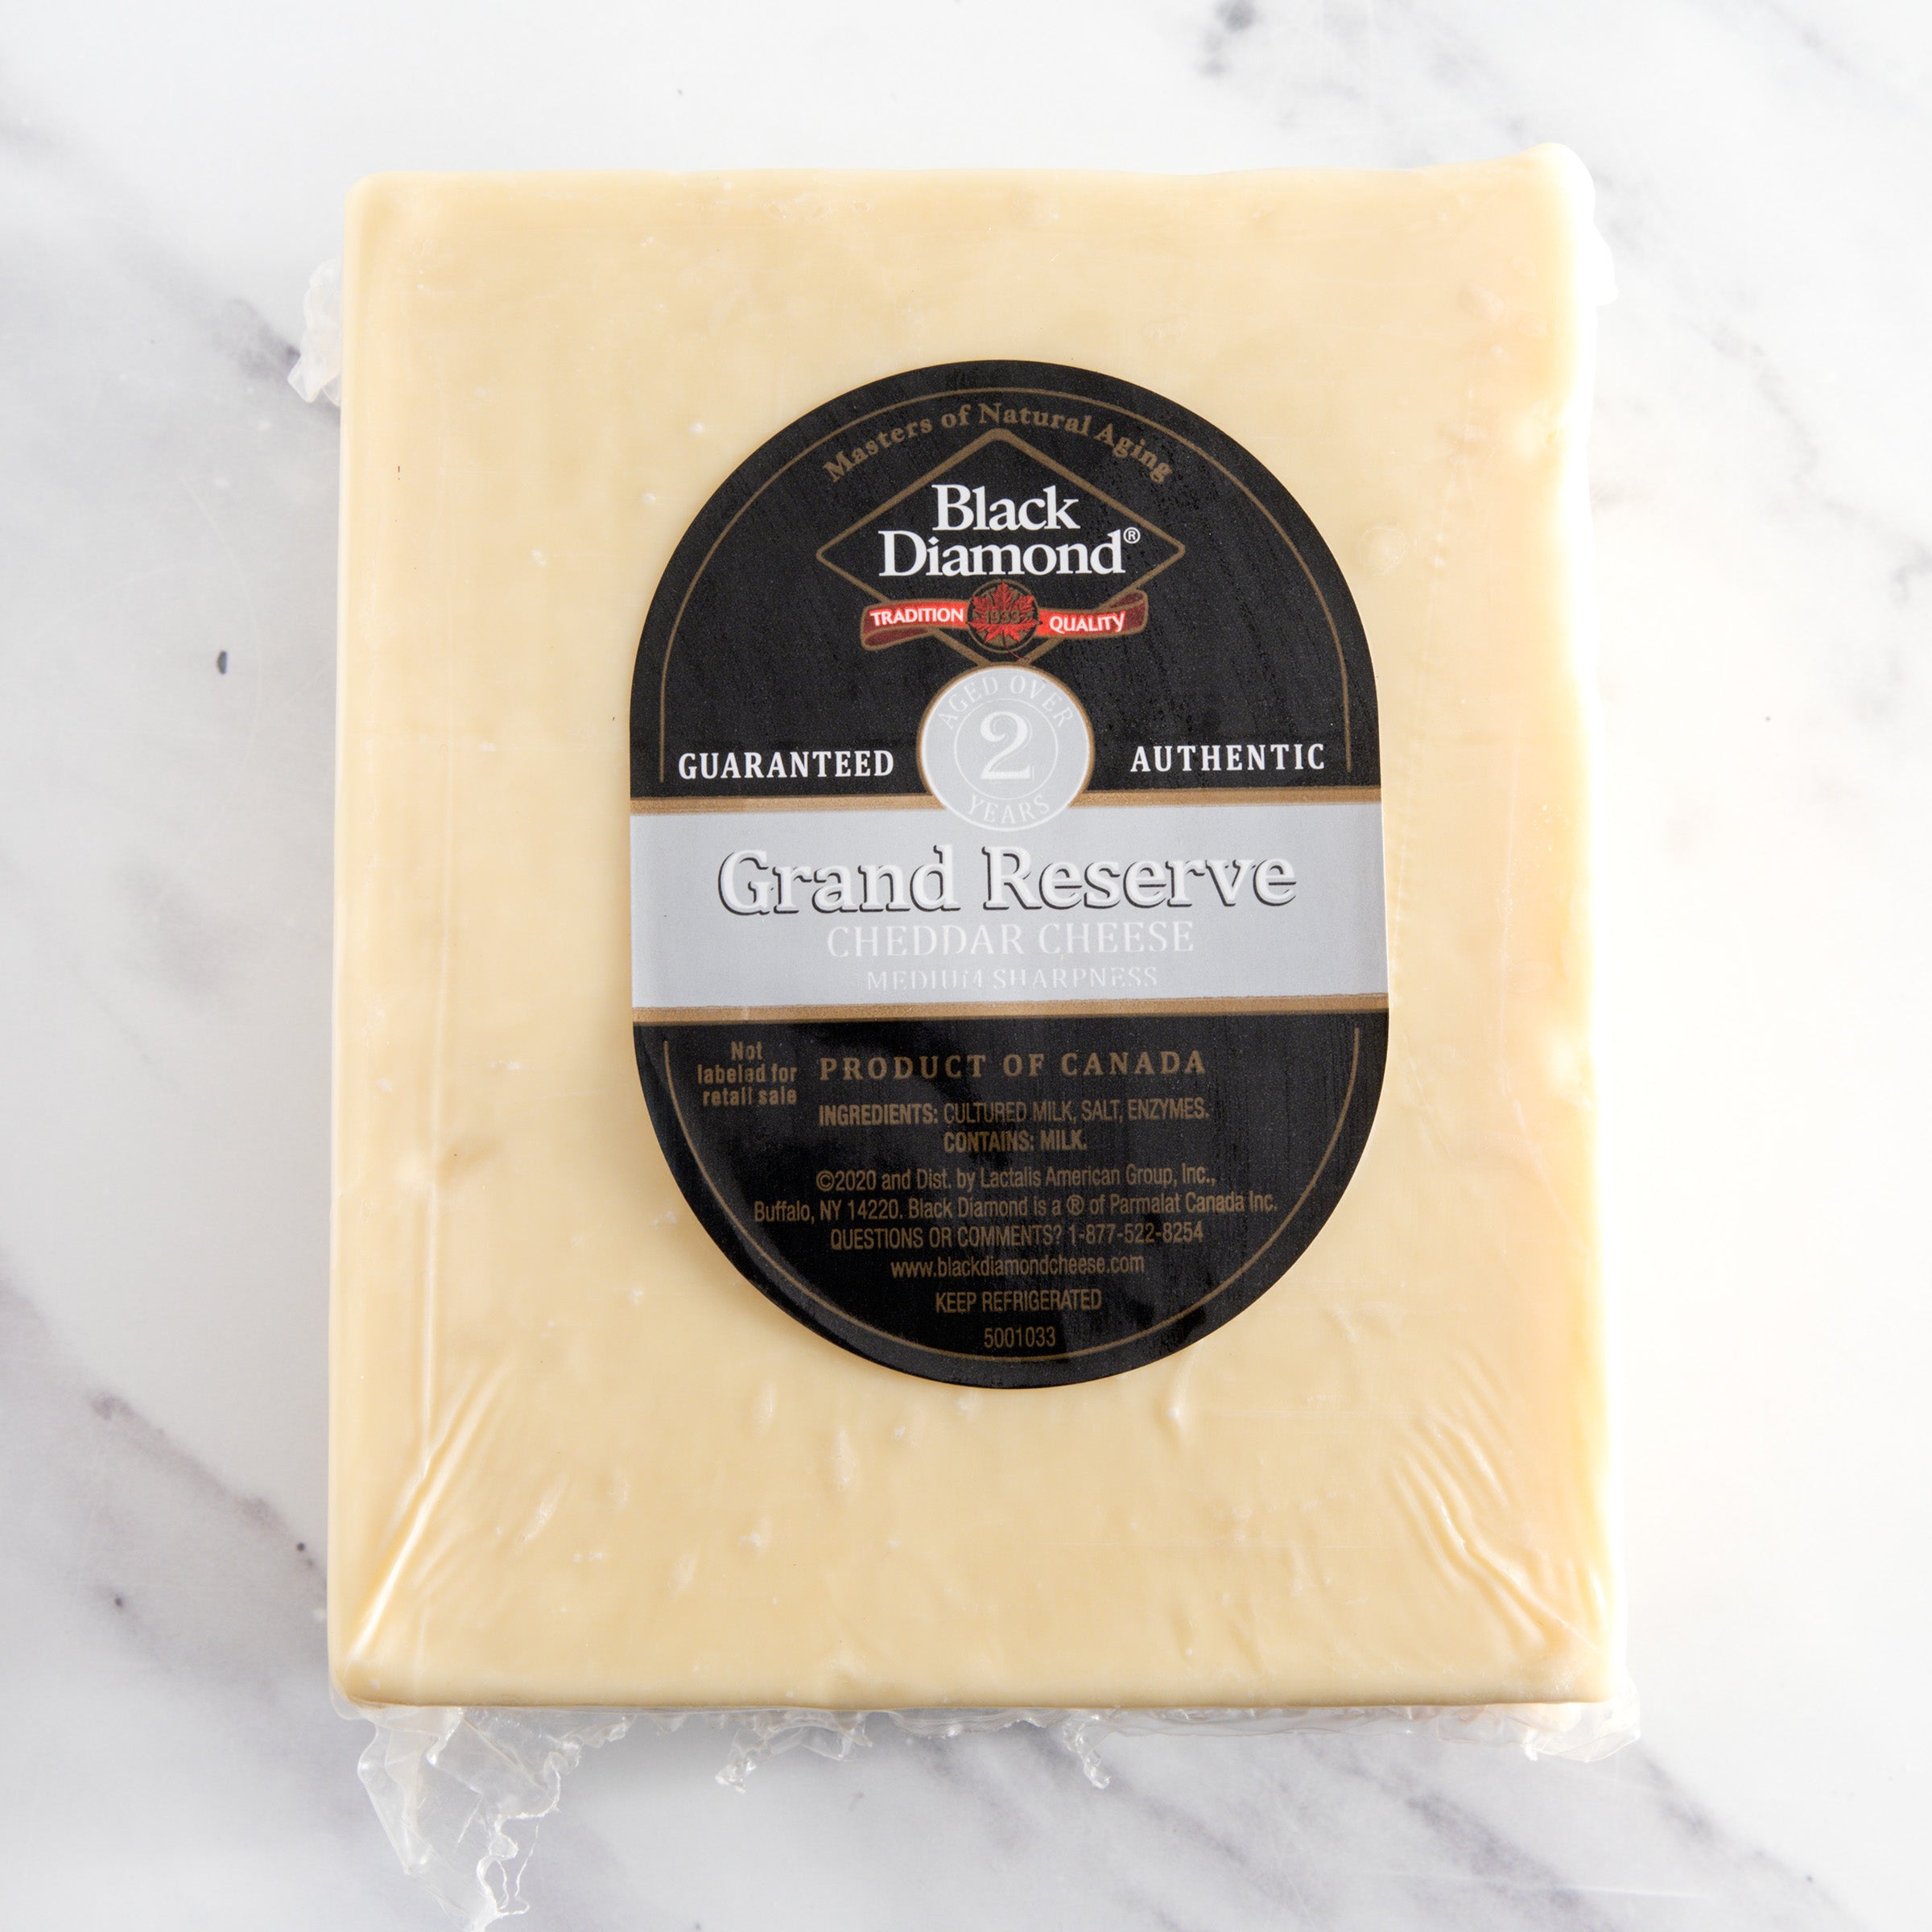 igourmet_1115s_reserve cheddar cheese_black diamond_cheese